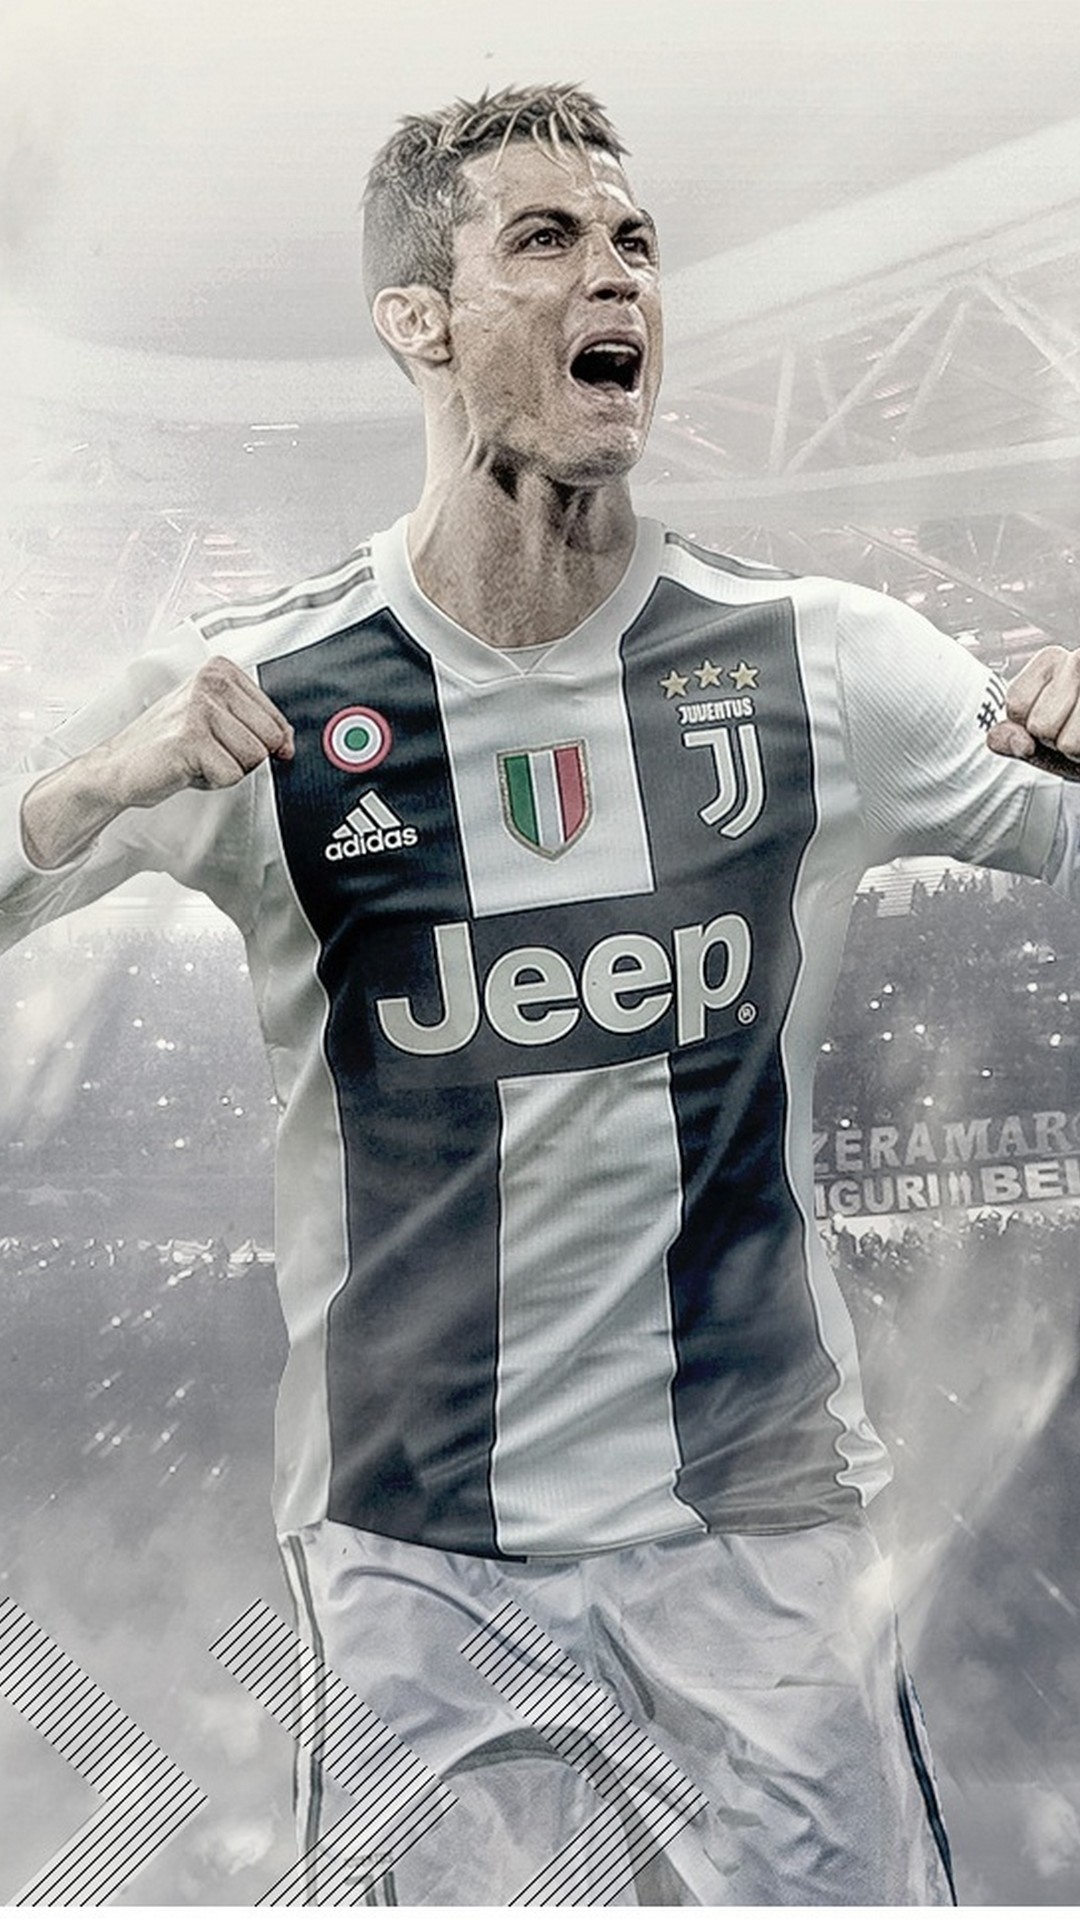 Wallpaper Android Cristiano Ronaldo Juventus   2020 Android Wallpapers